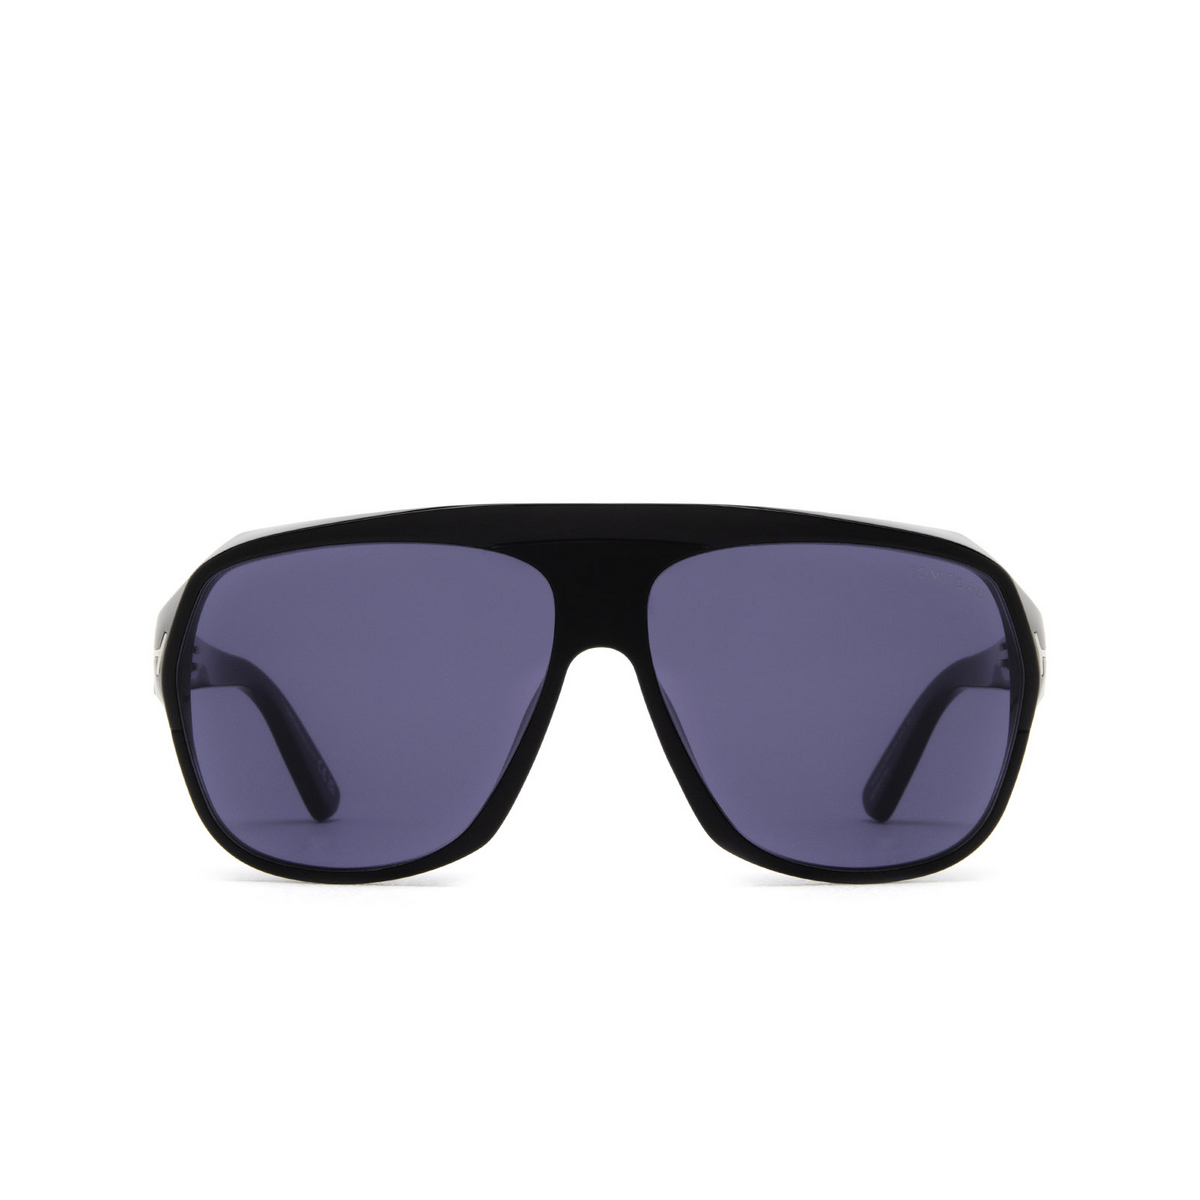 Tom Ford HAWKINGS-02 Sunglasses 01V Black - front view